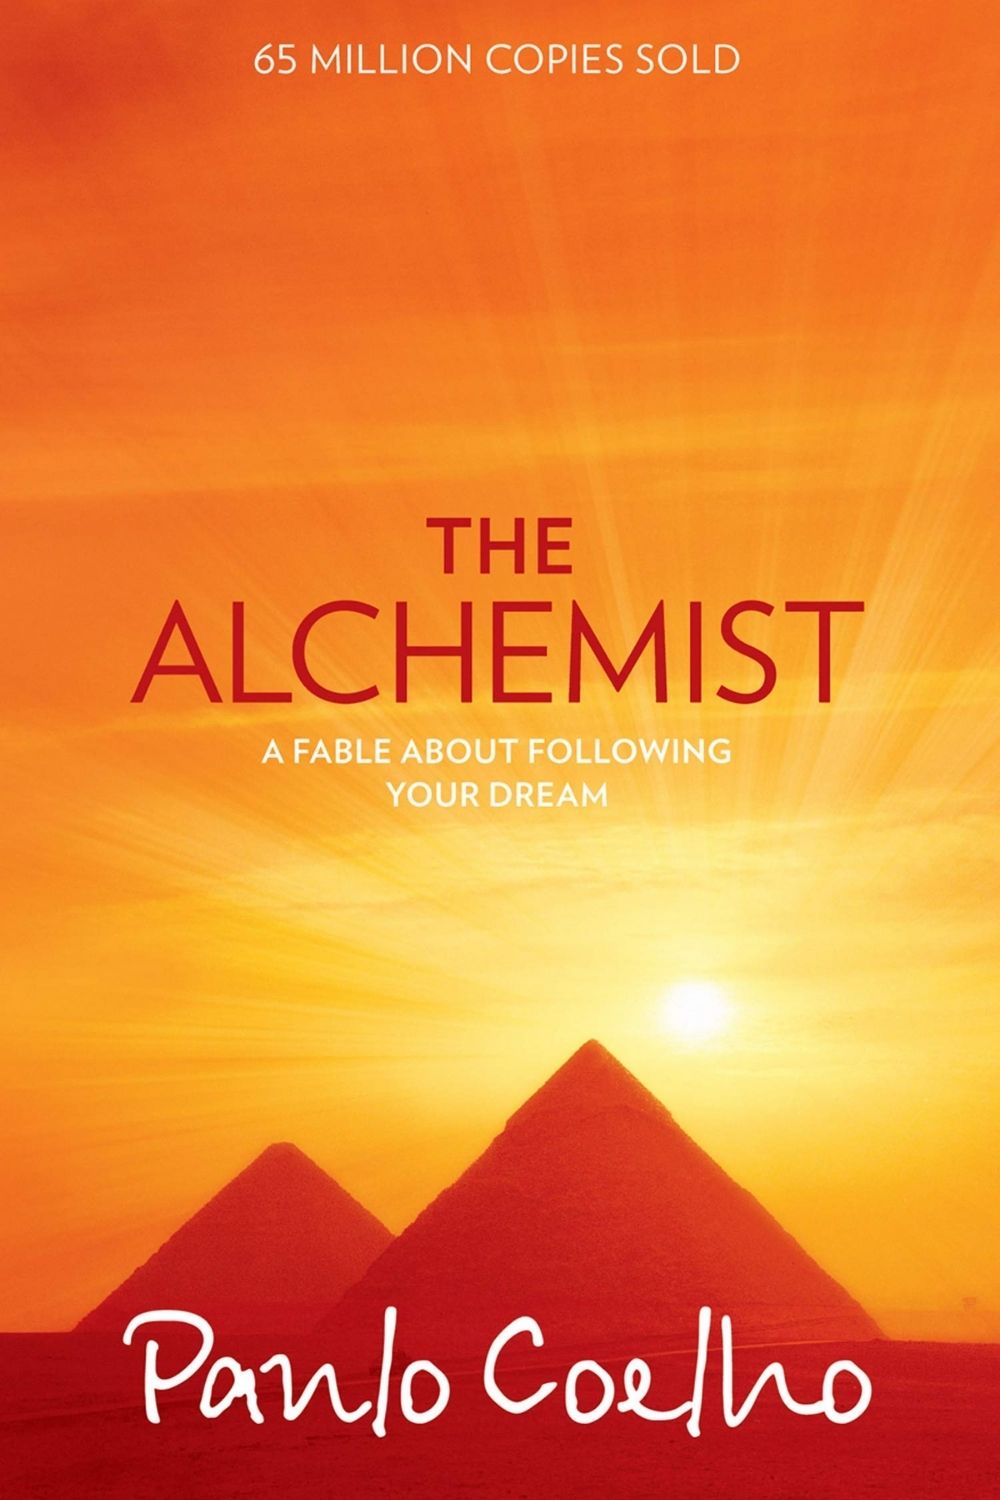 L'alchimiste de Paulo Coelho